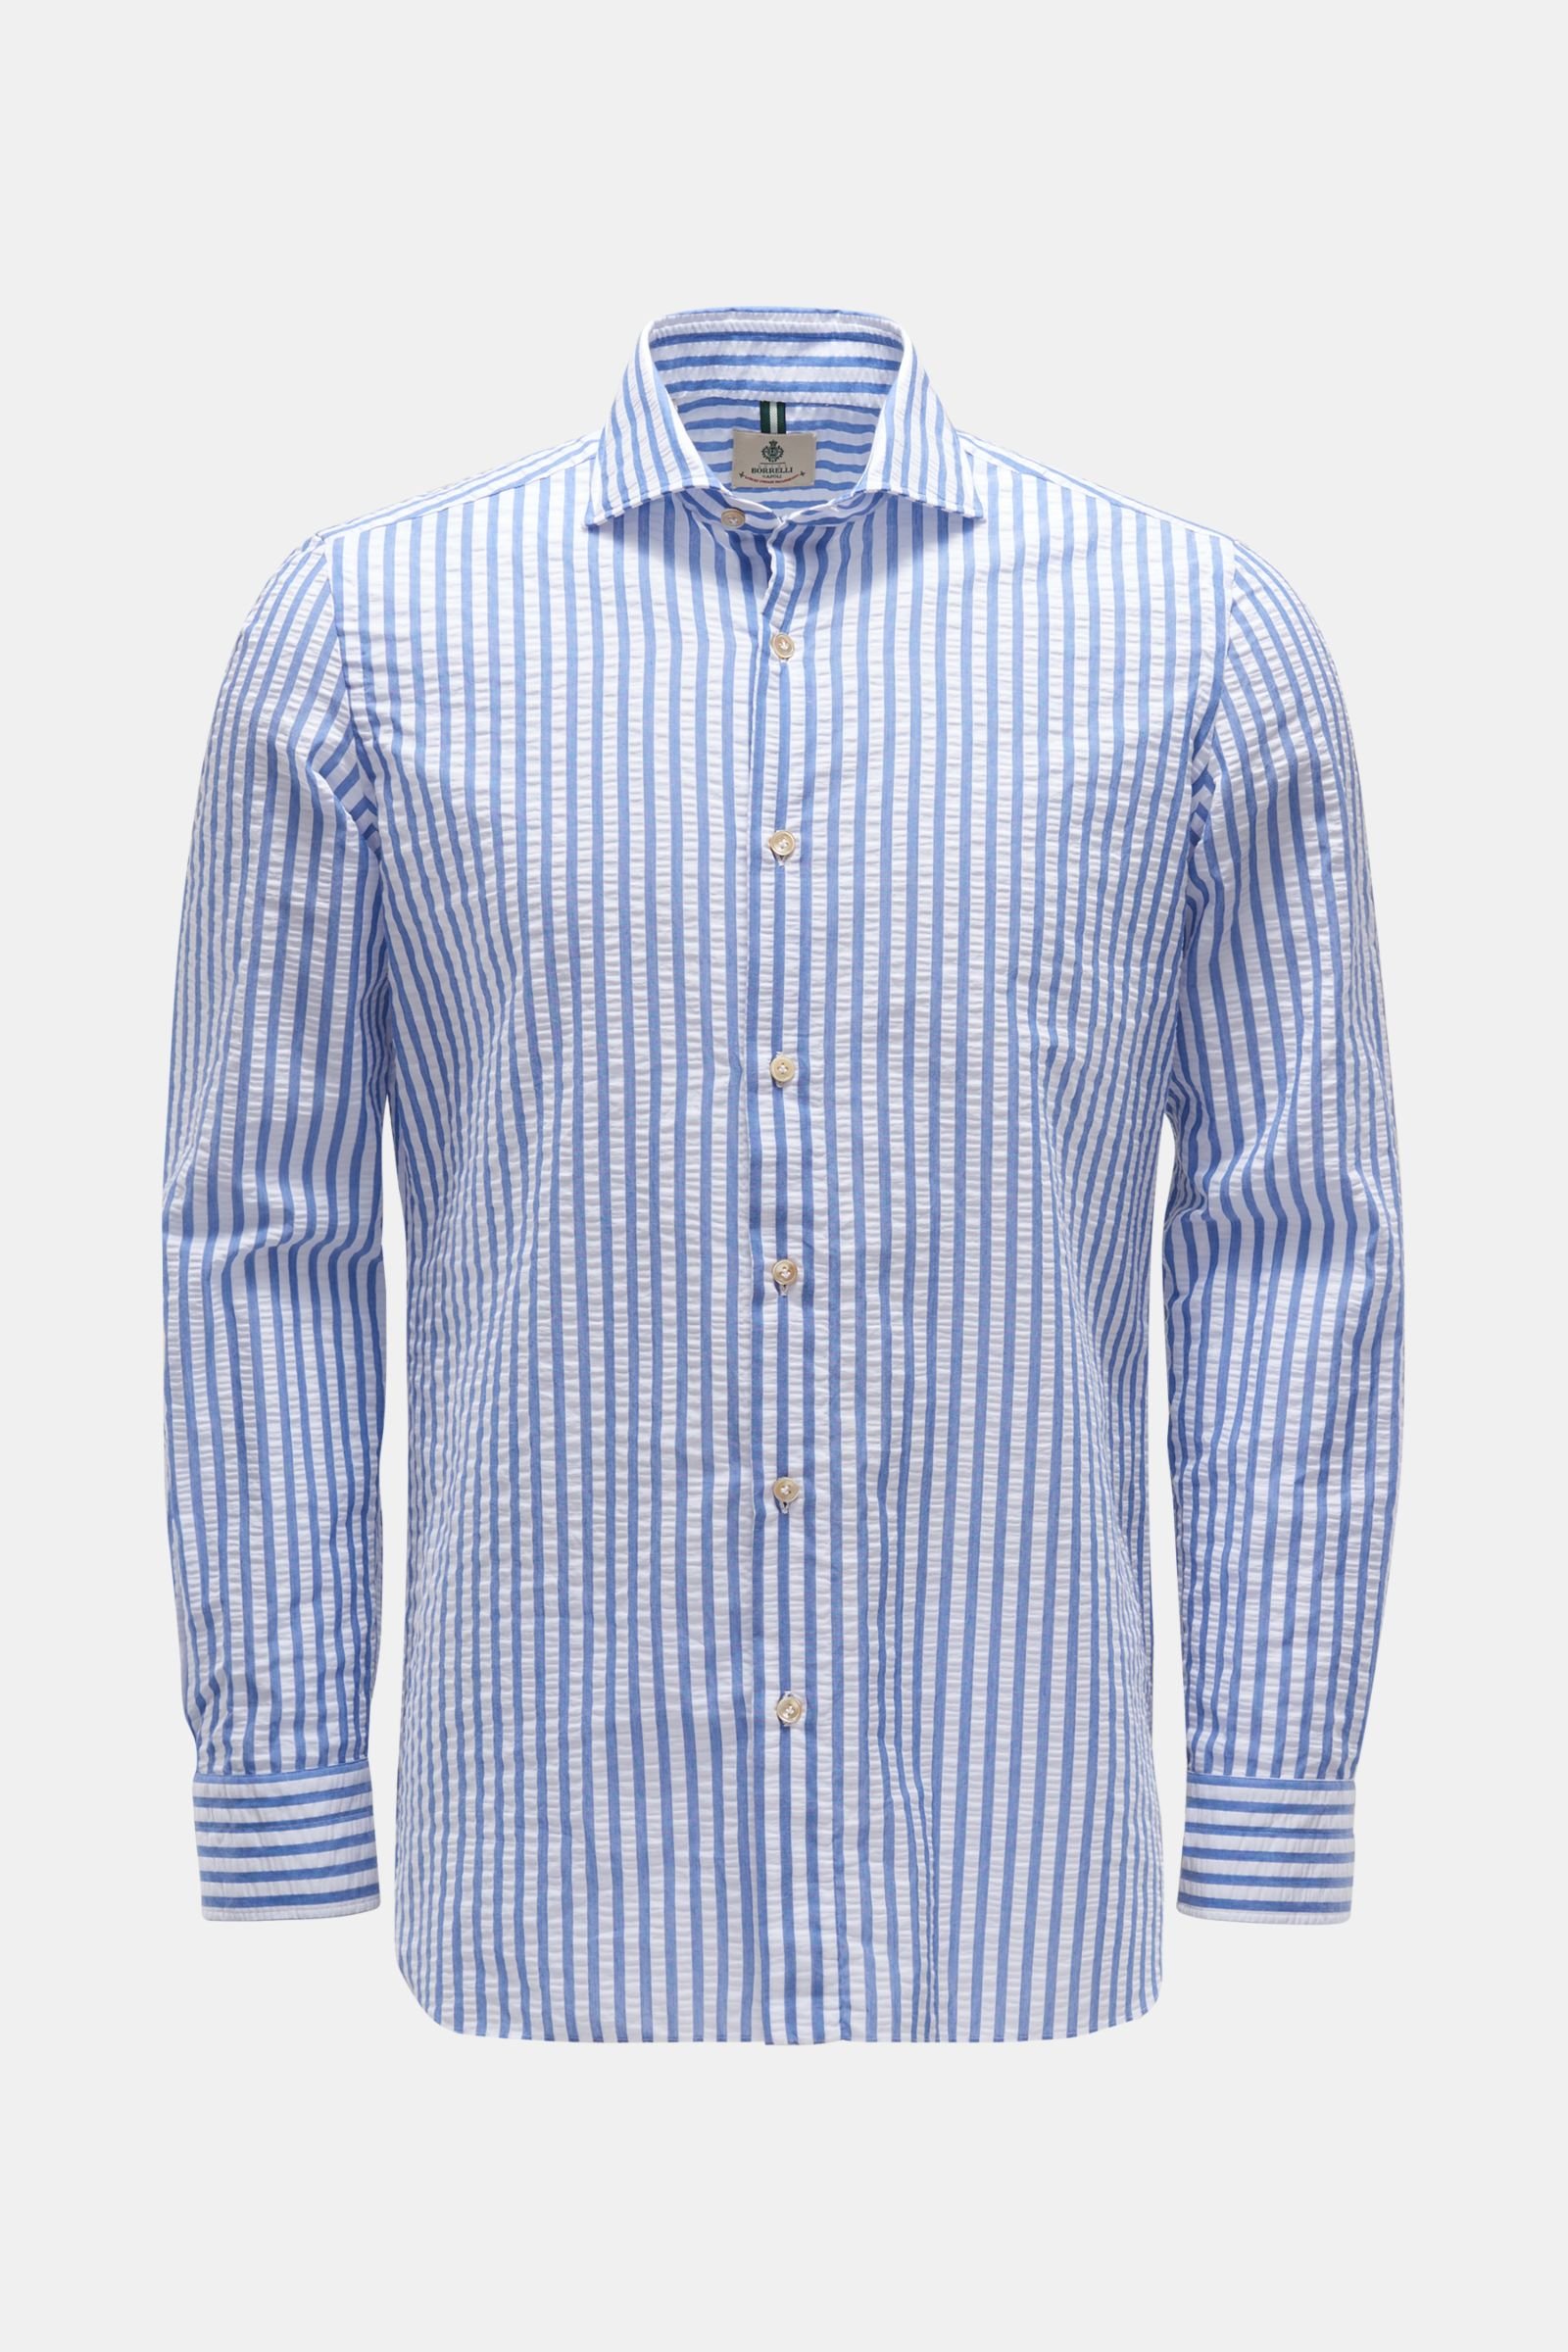 Seersucker shirt 'Nando' shark collar grey-blue/white striped